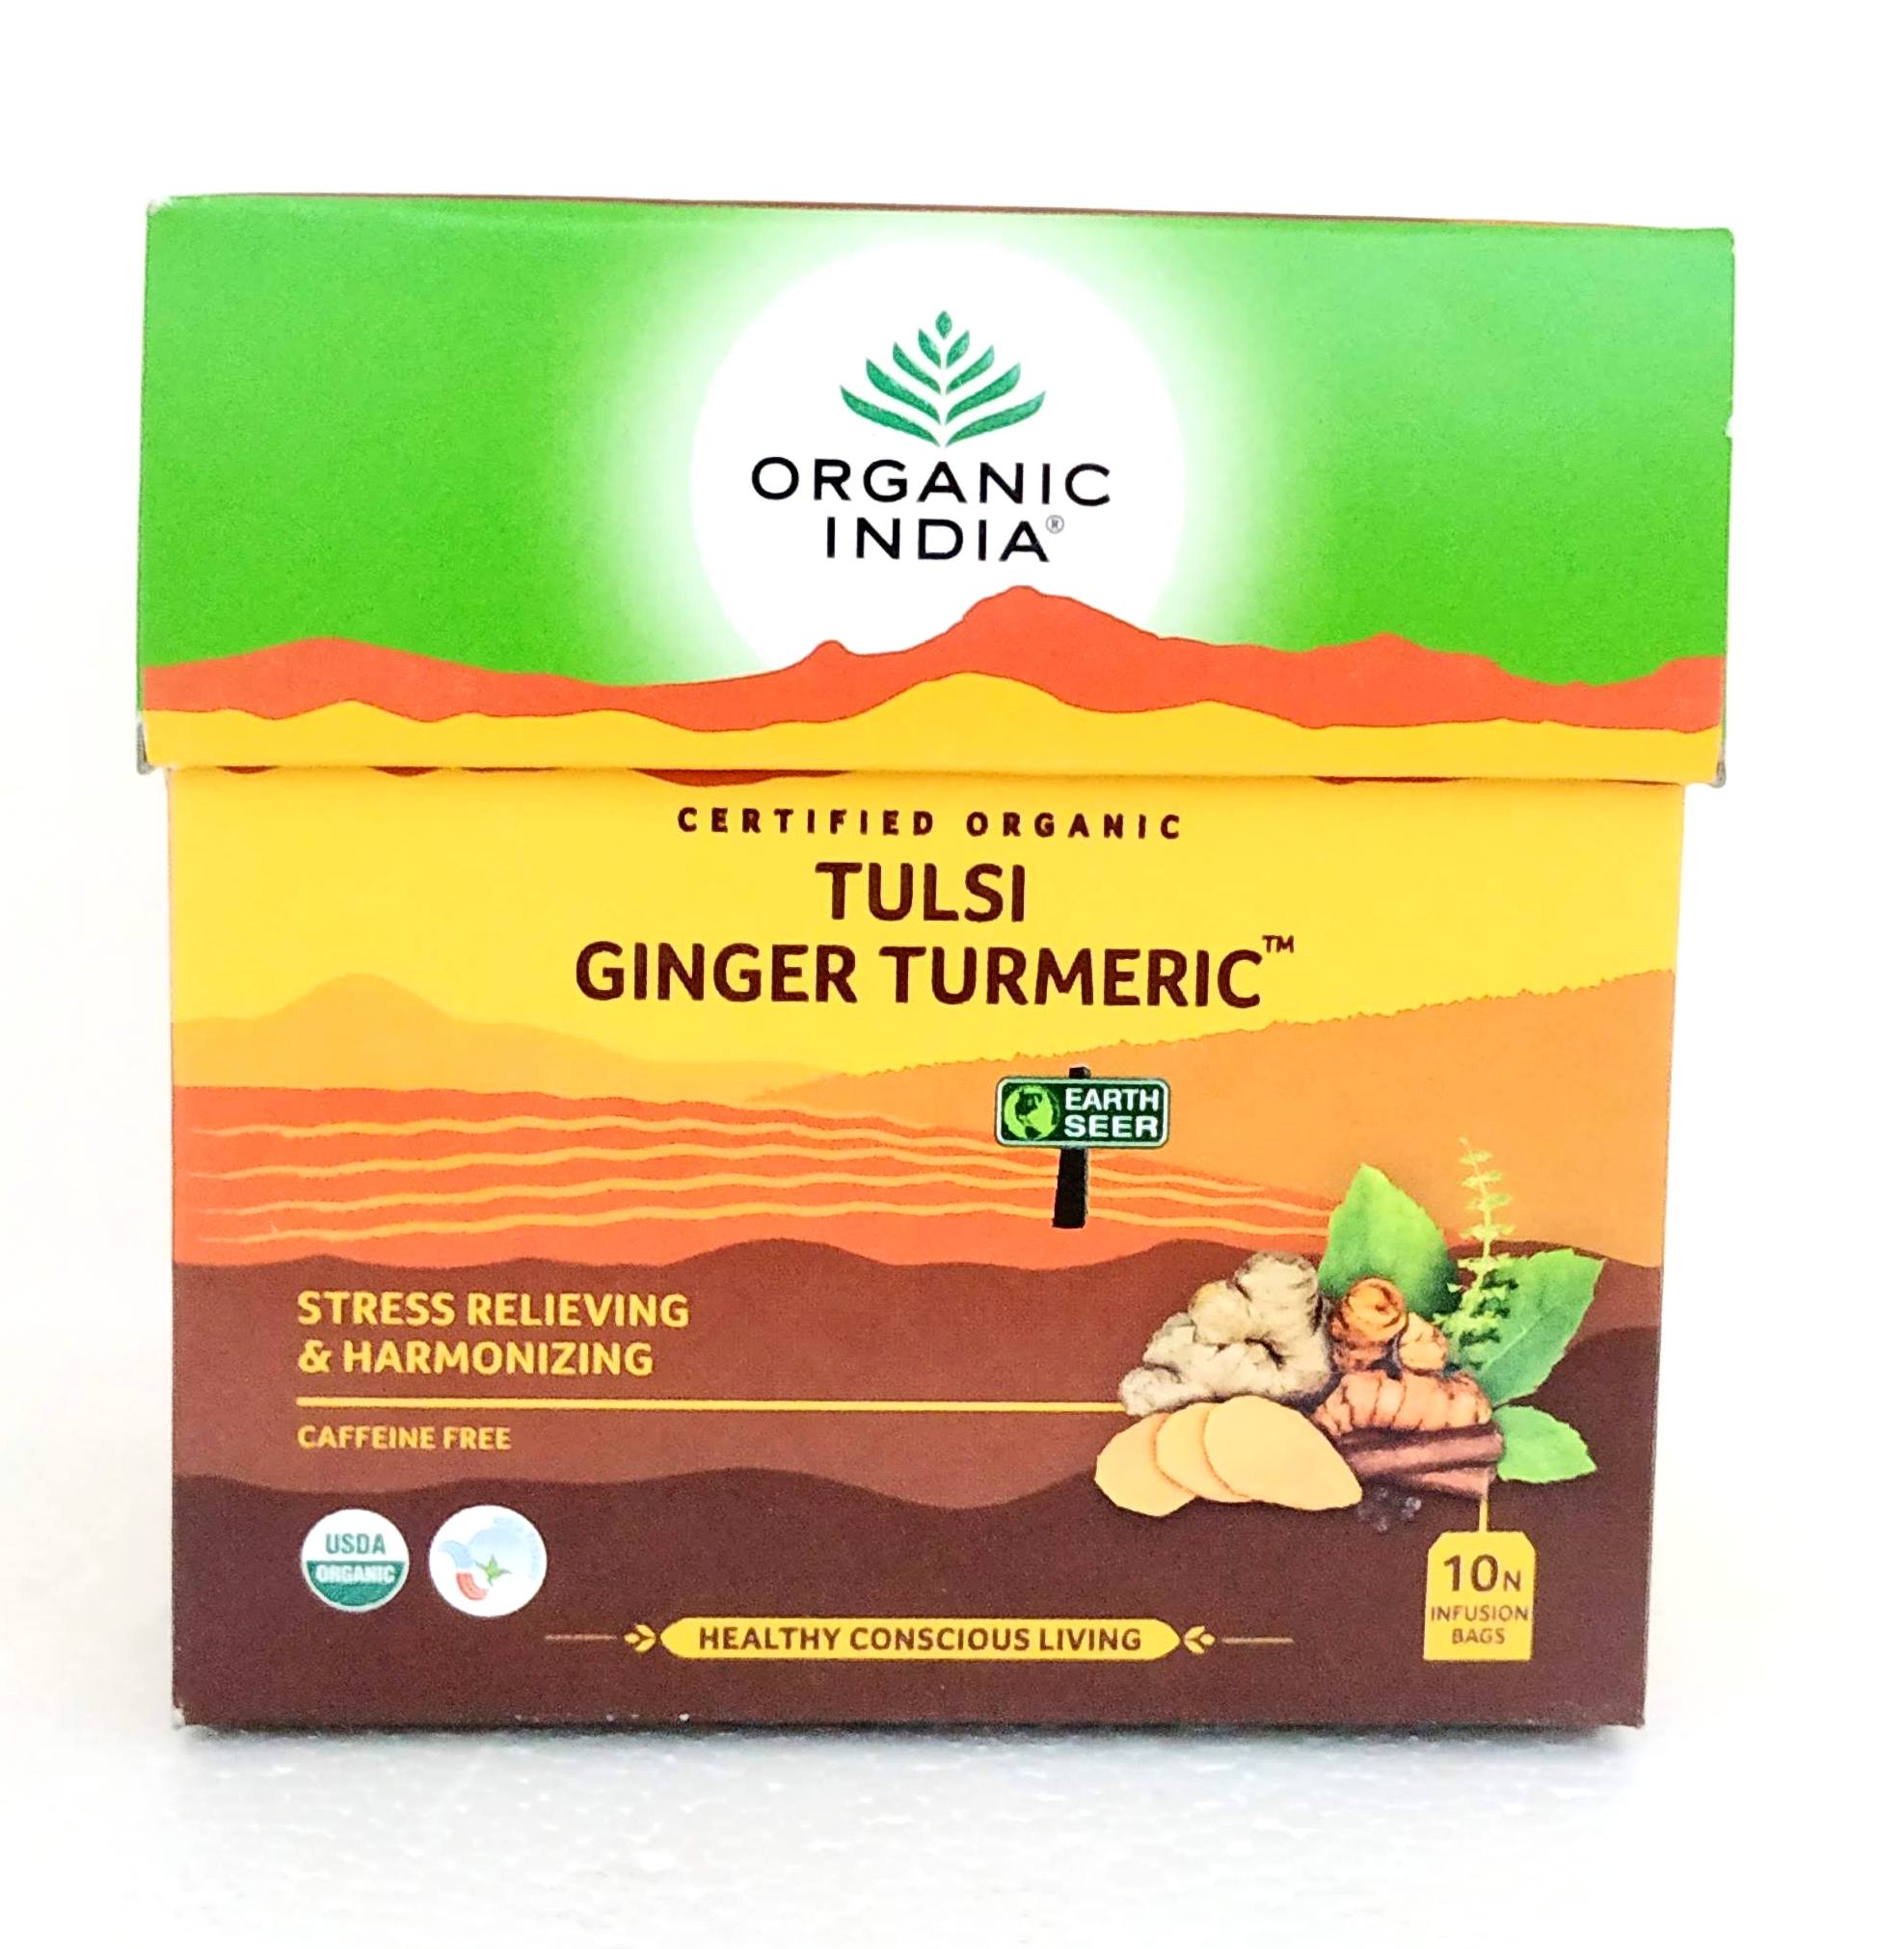 Shop Tulsi ginger turmeric tea - 10sachets at price 64.00 from Organic India Online - Ayush Care